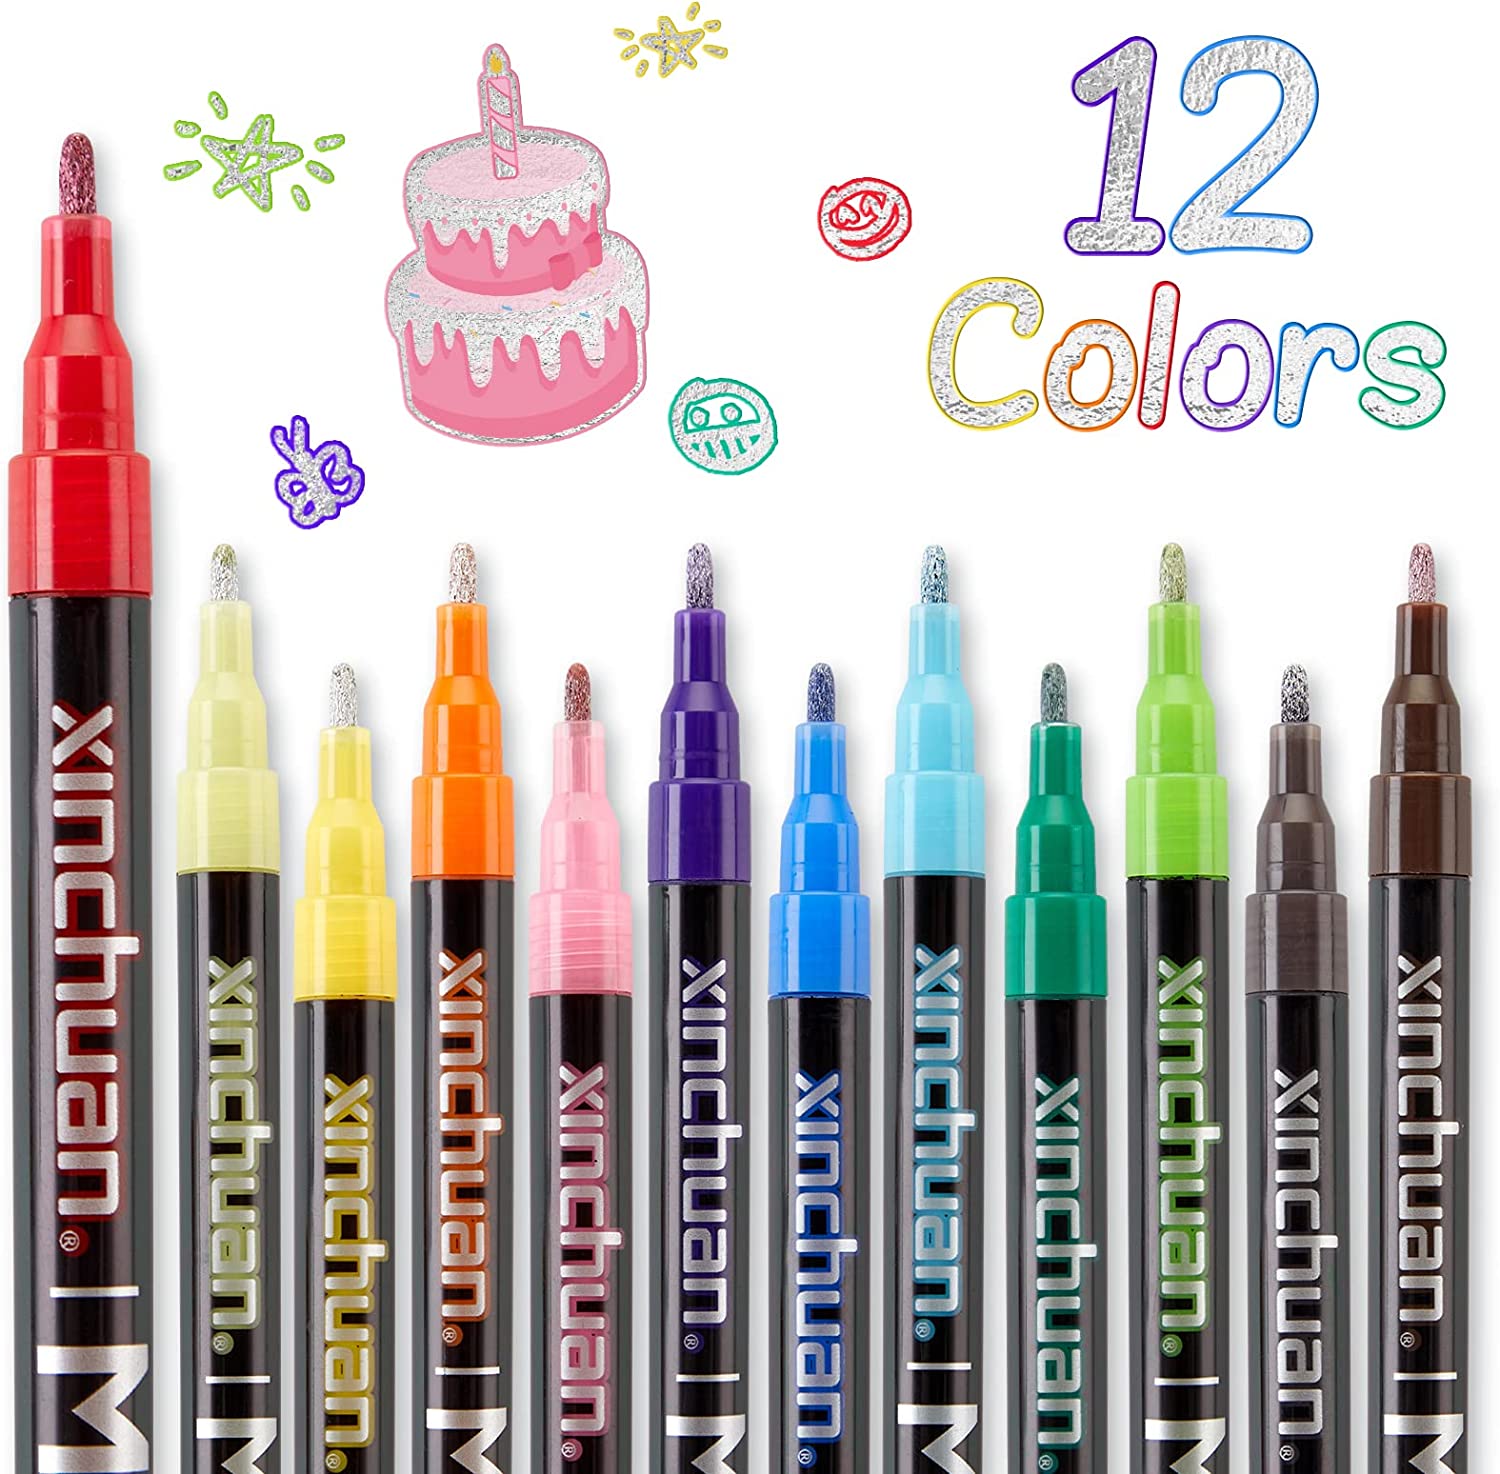  Aen Art Double Line Markers Outline Pens, Squiggles Shimmer  Outline Marker Set, 16 Colors Doodle Shimmer Pen for Drawing, Making Card,  Craft Project : Arts, Crafts & Sewing